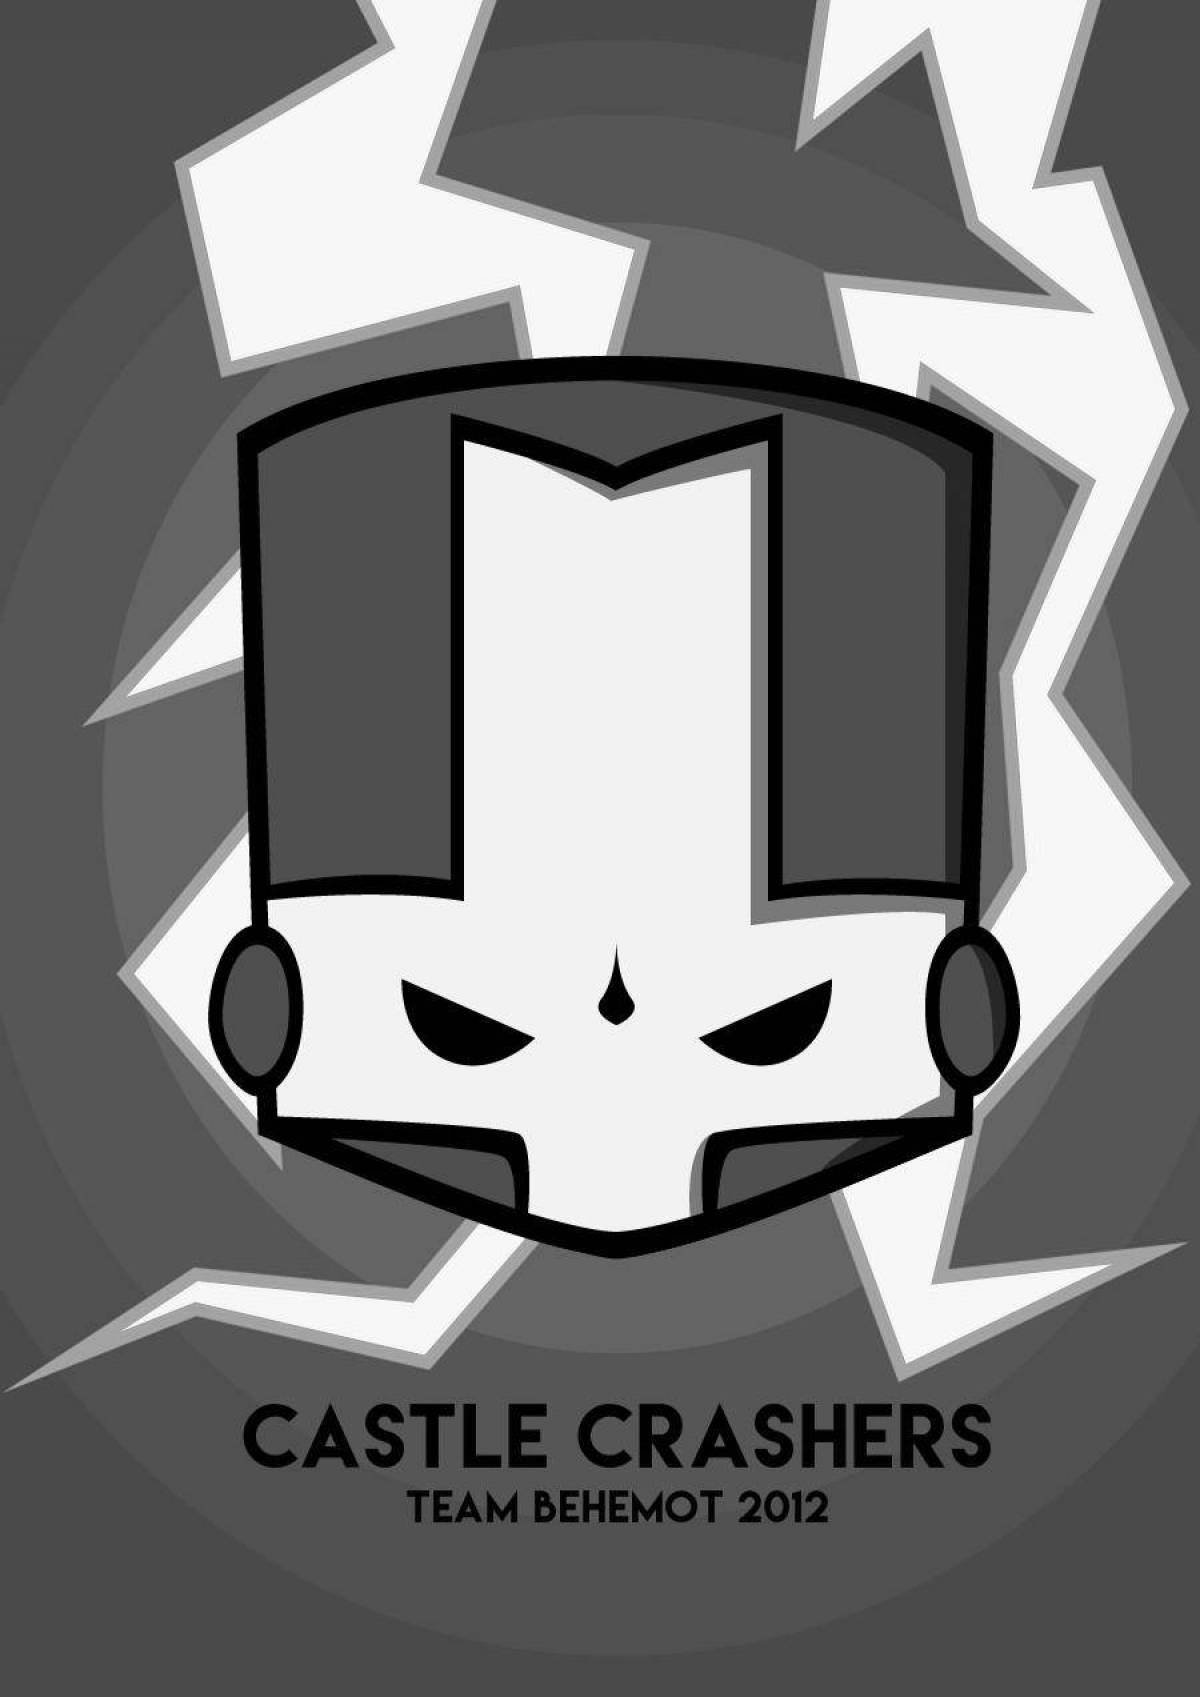 Generous coloring of castle crashers